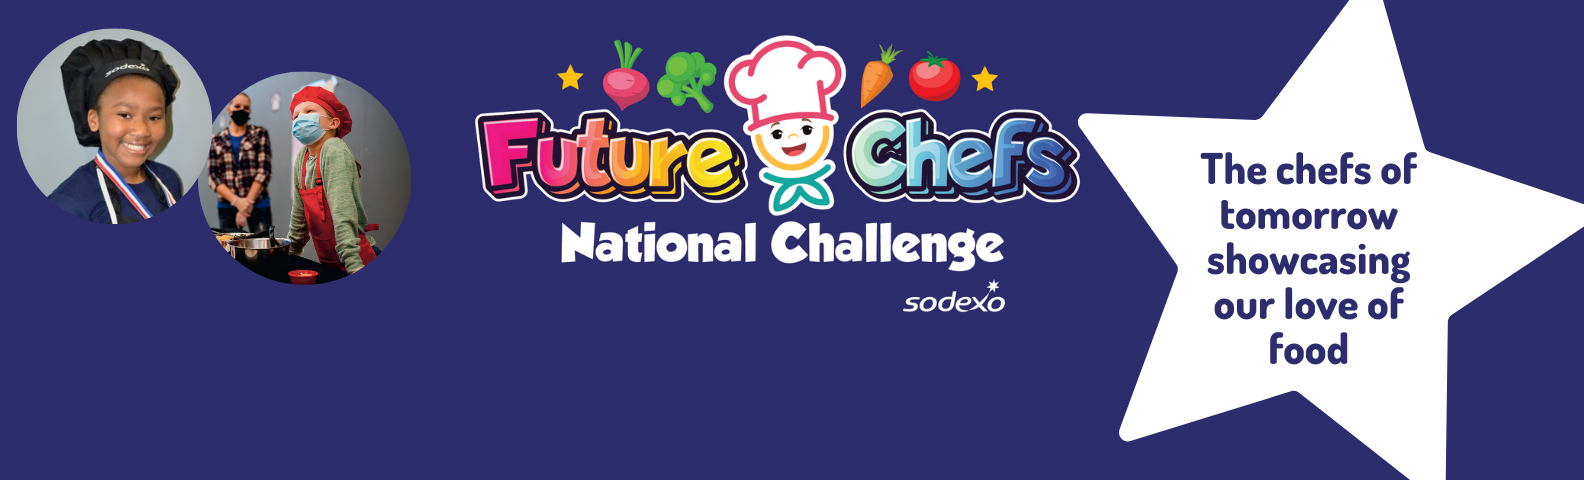 Future Chefs National Challenge Sodexo